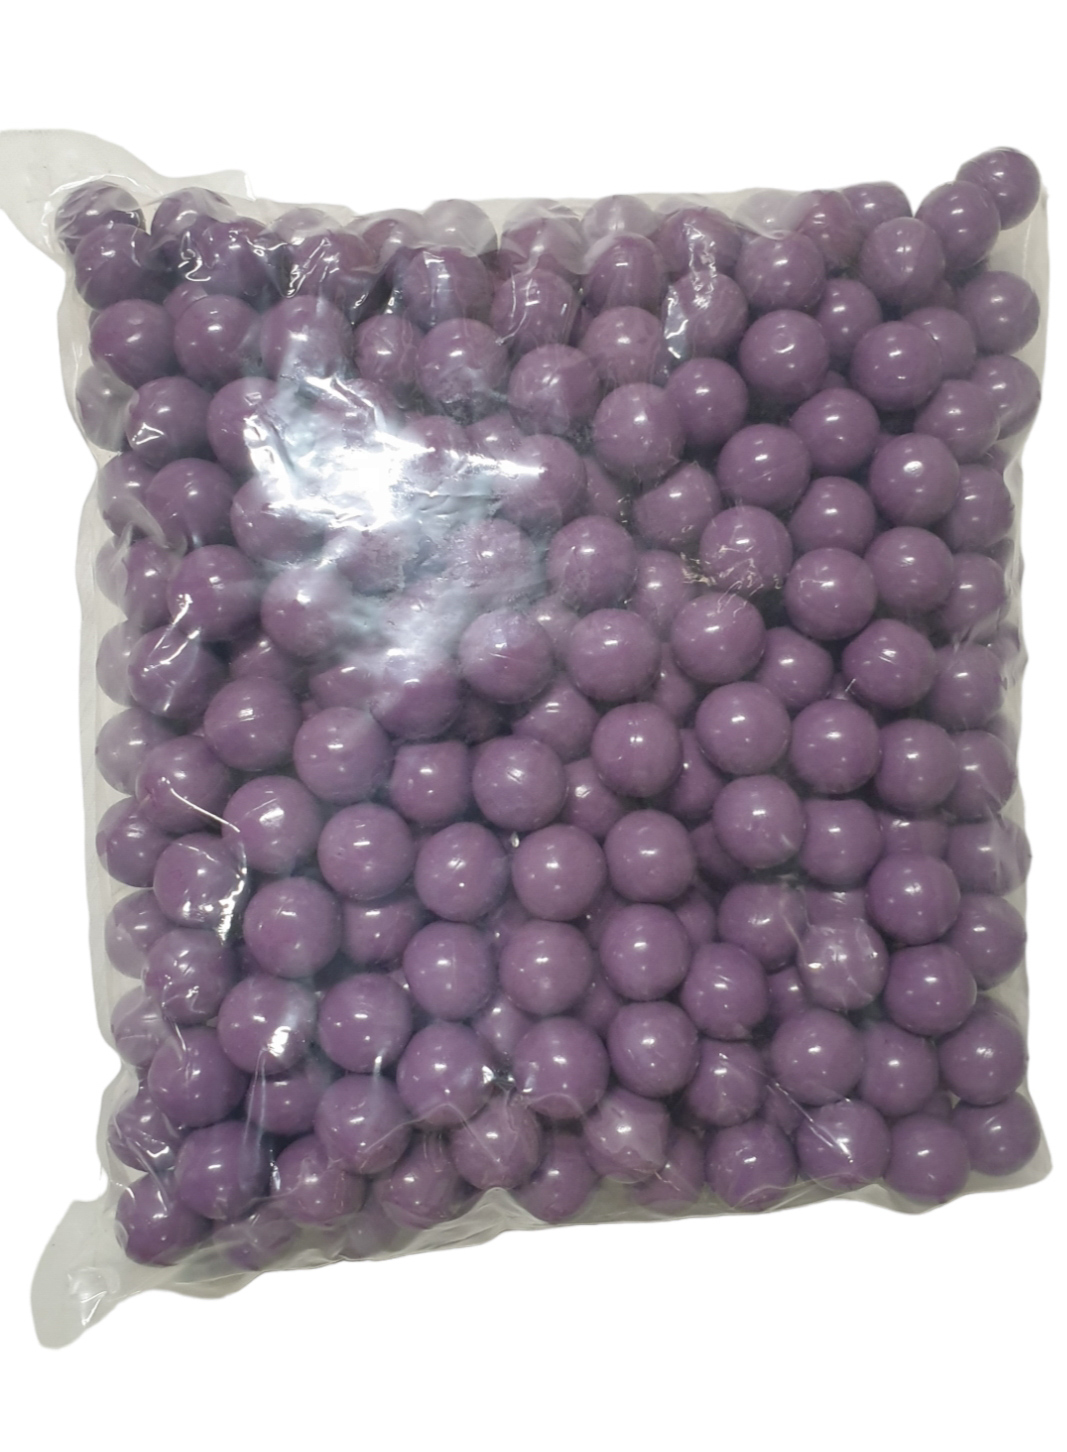 Cinder Off Season Paintballs .68 Cal 2000 rds (EU) Mixed colors